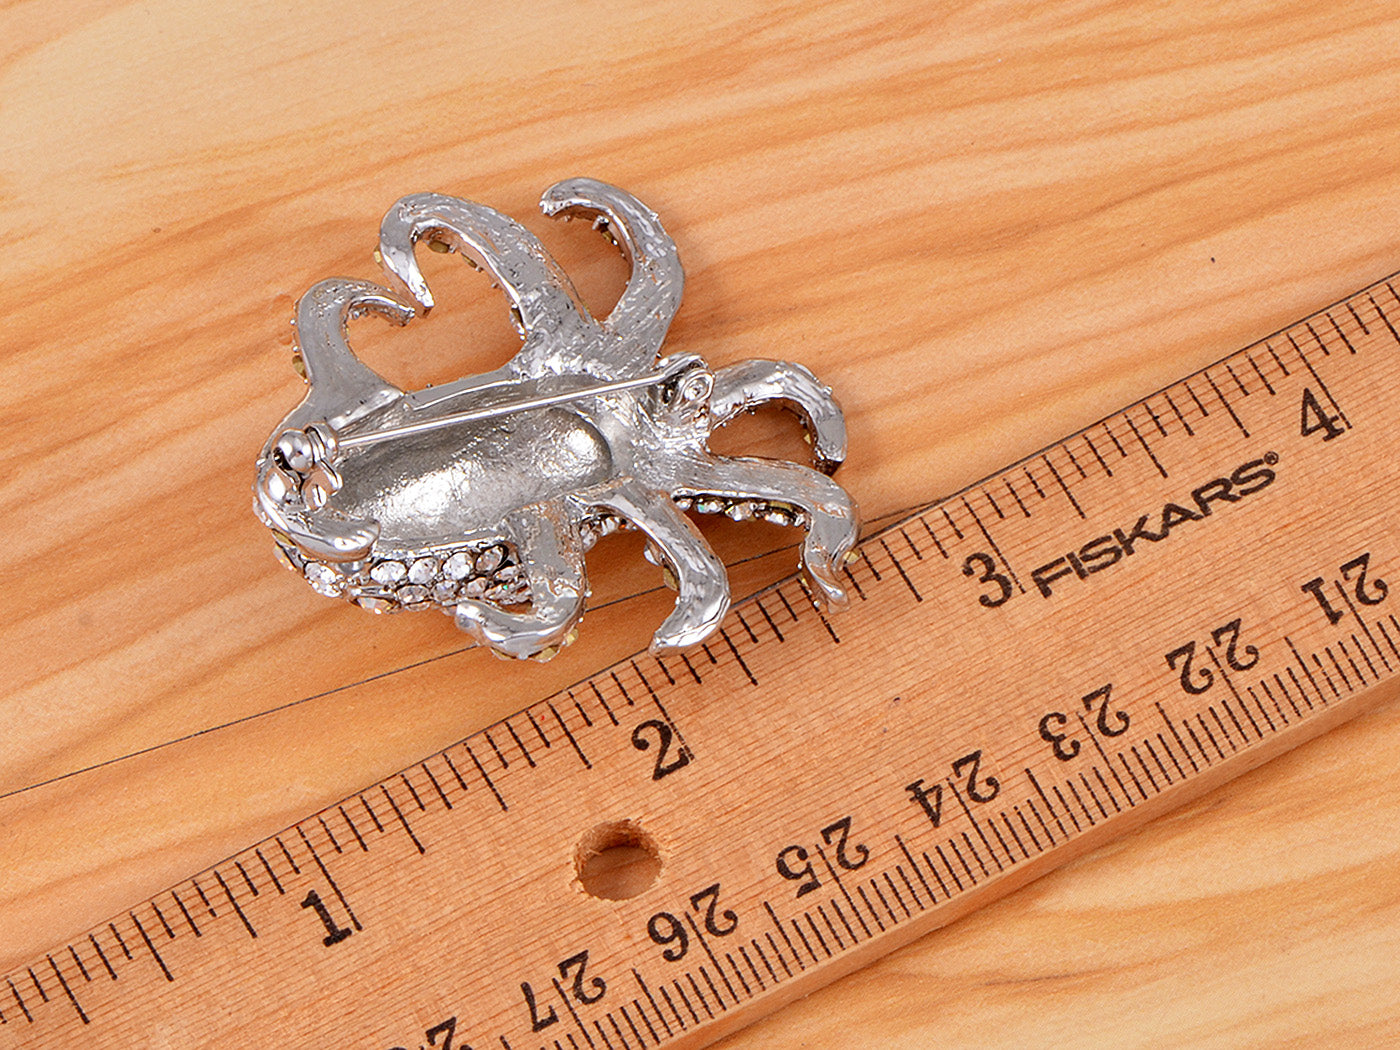 Collectible Sea Animal Creature Octopus Pin Brooch